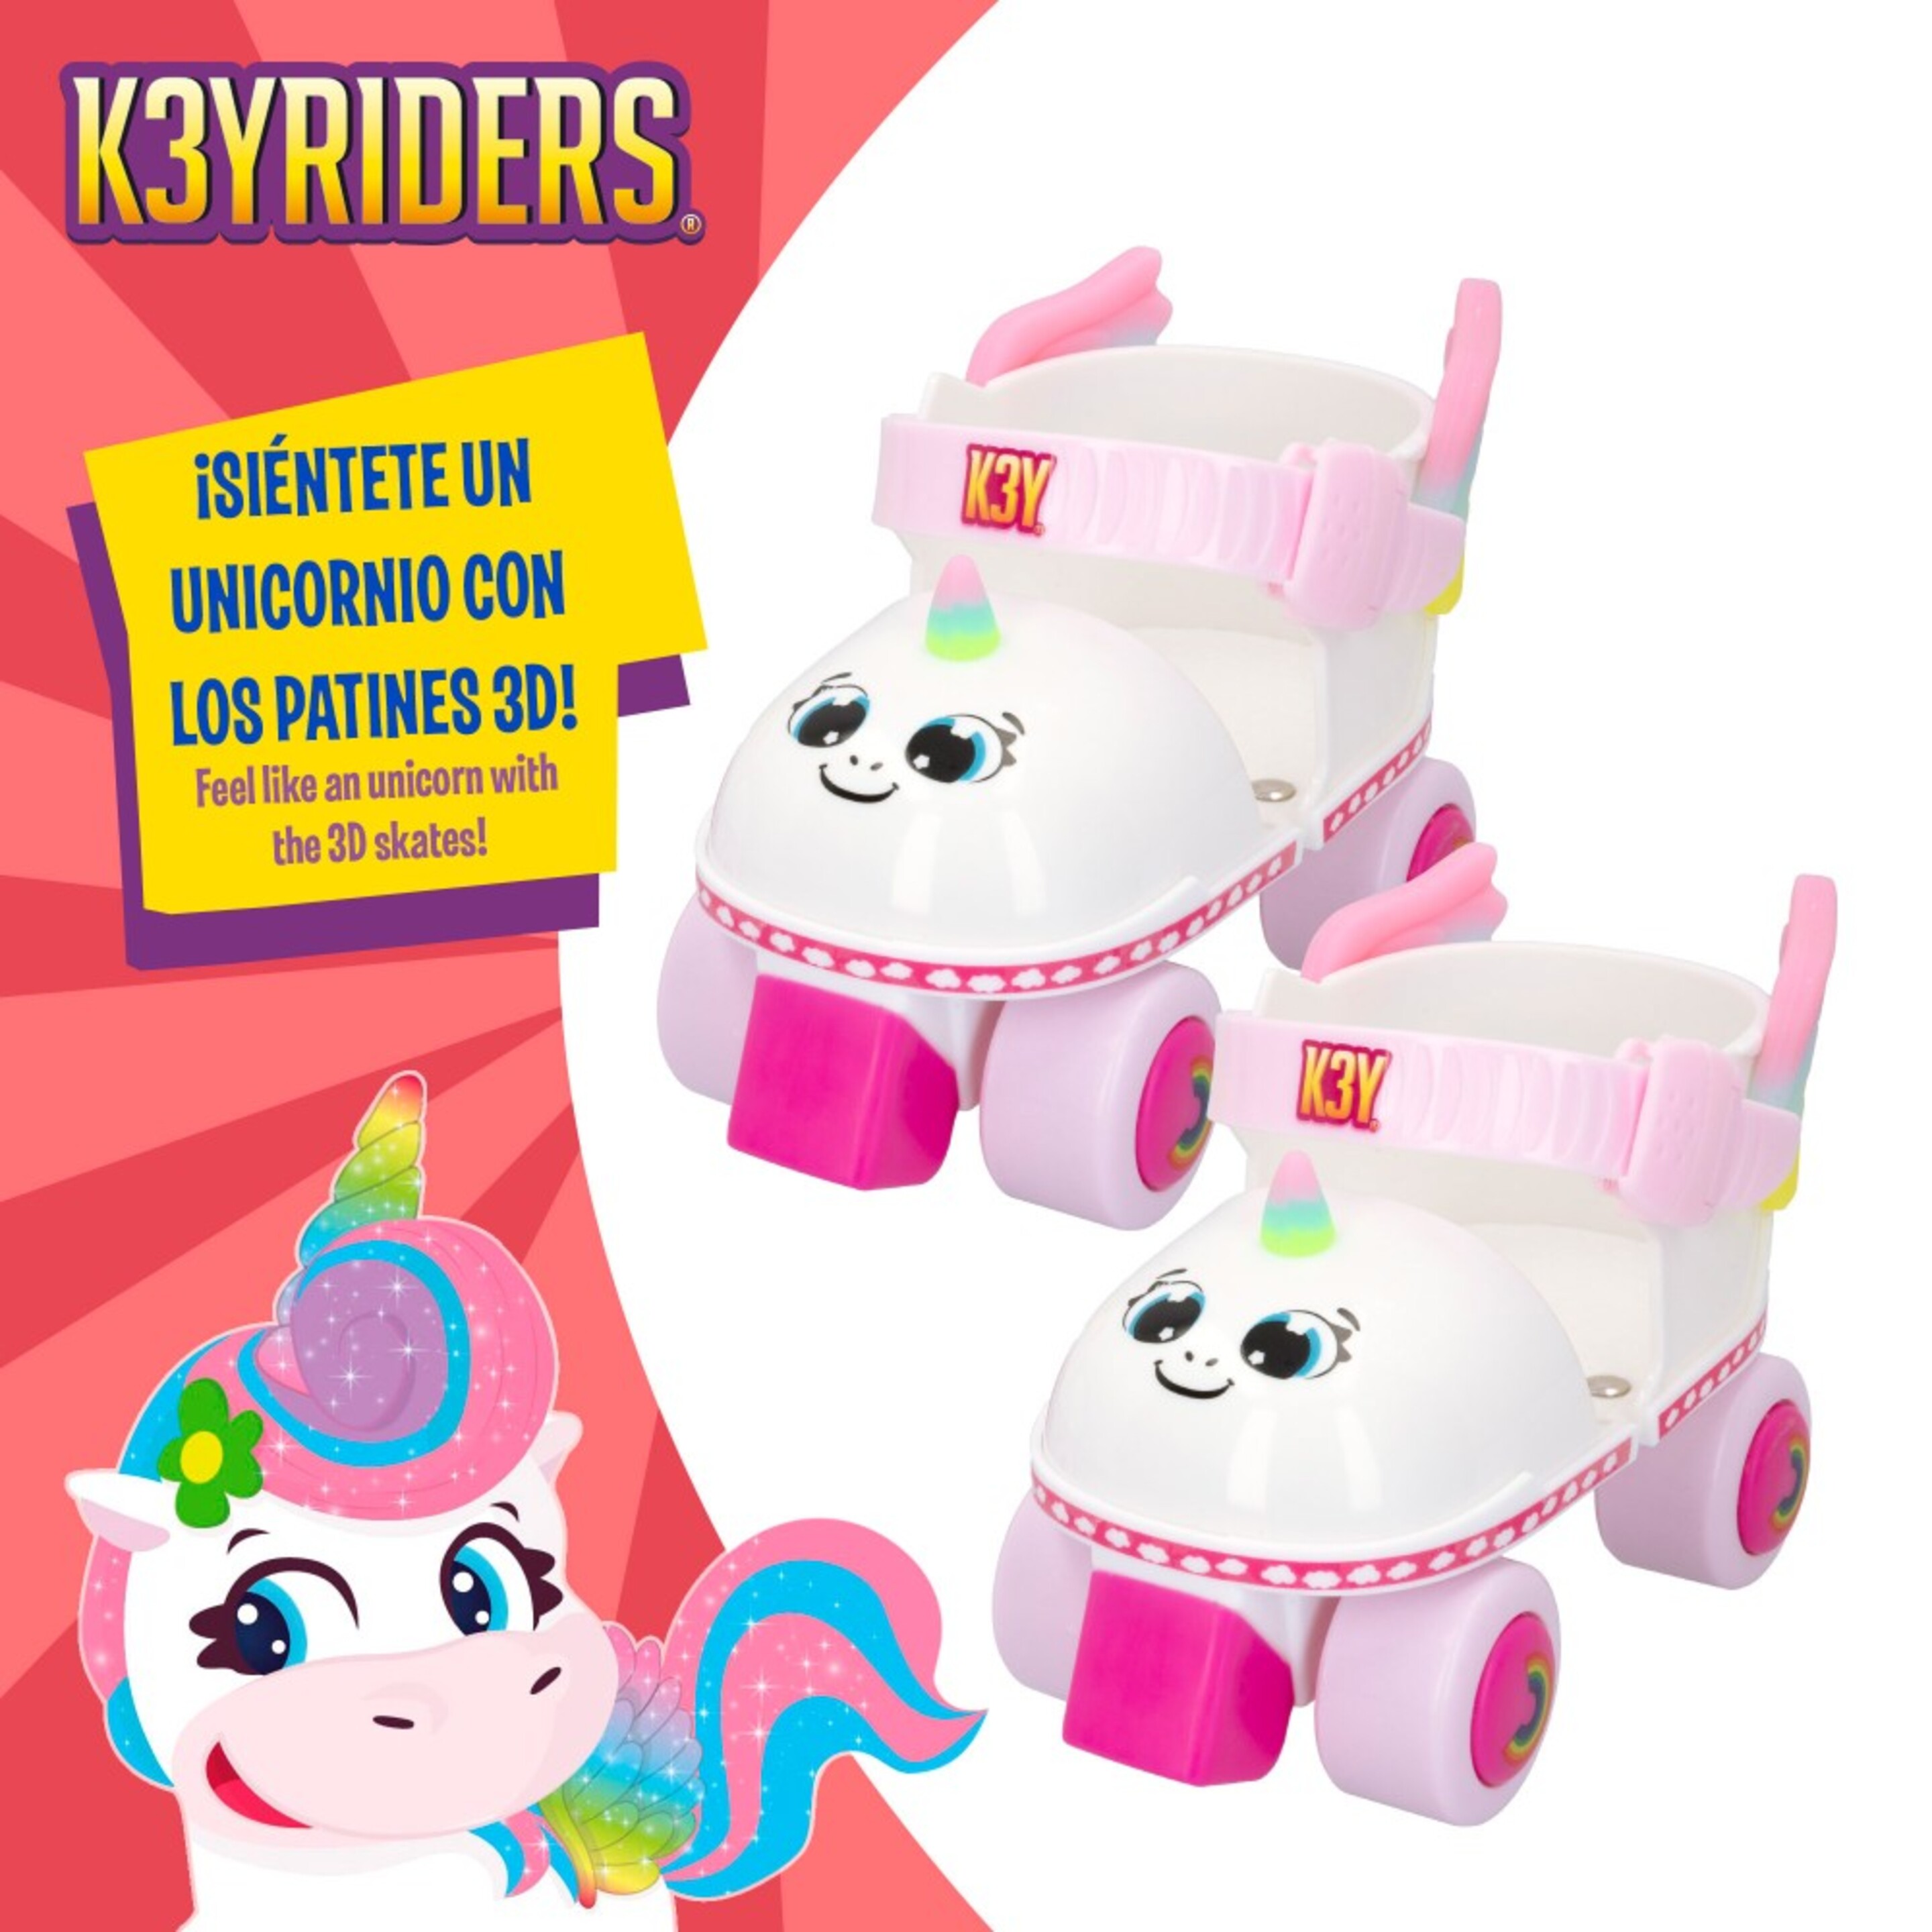 Kit Patines De Unicornio 4 Ruedas K3yriders - Multicolor  MKP